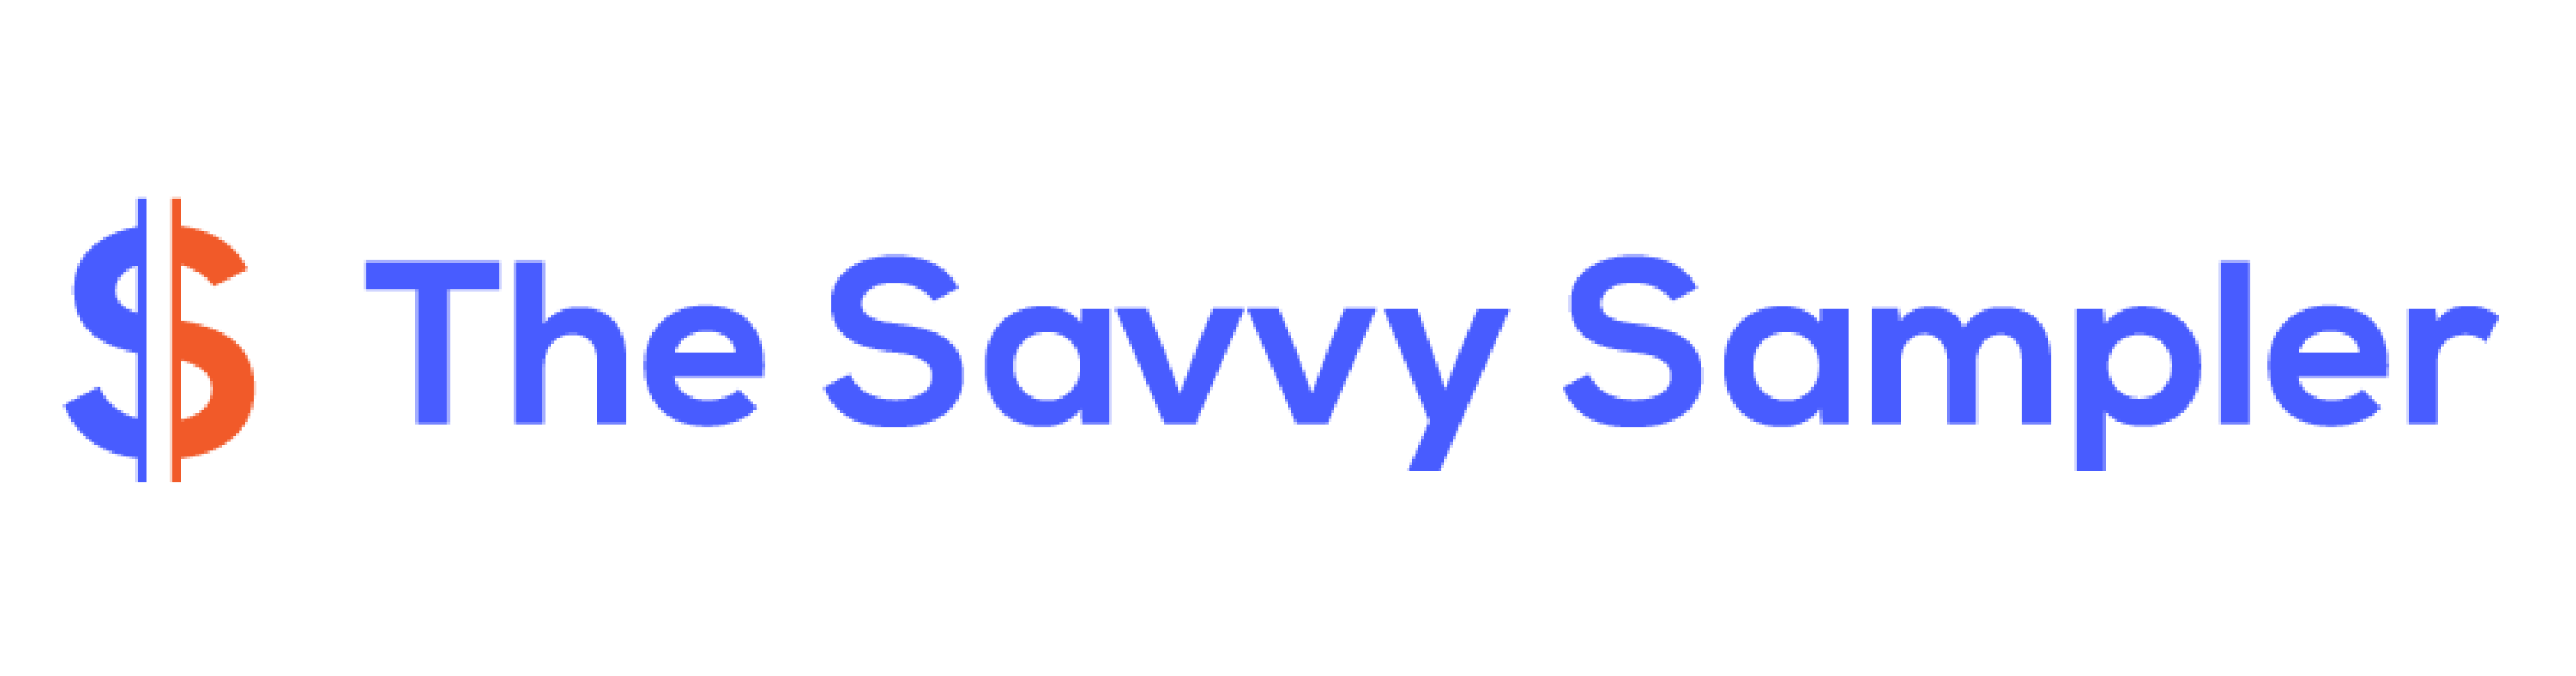 The Savvy Sampler Logo